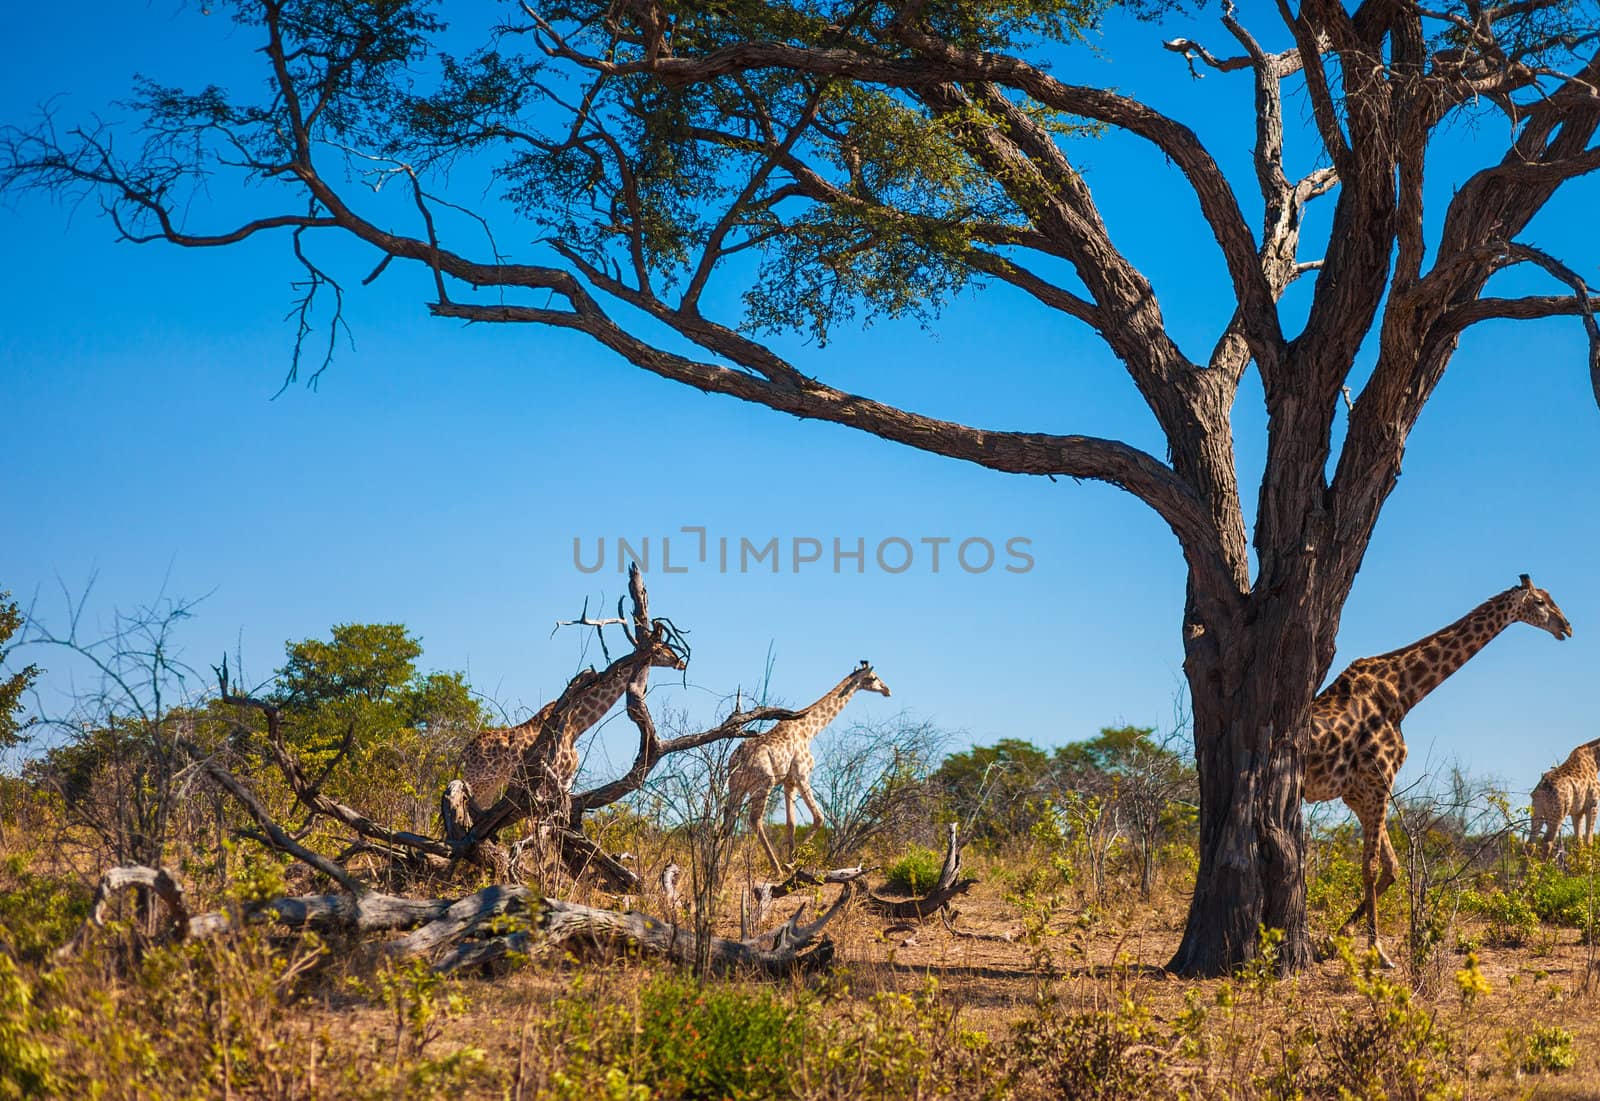 Giraffes walking by edan